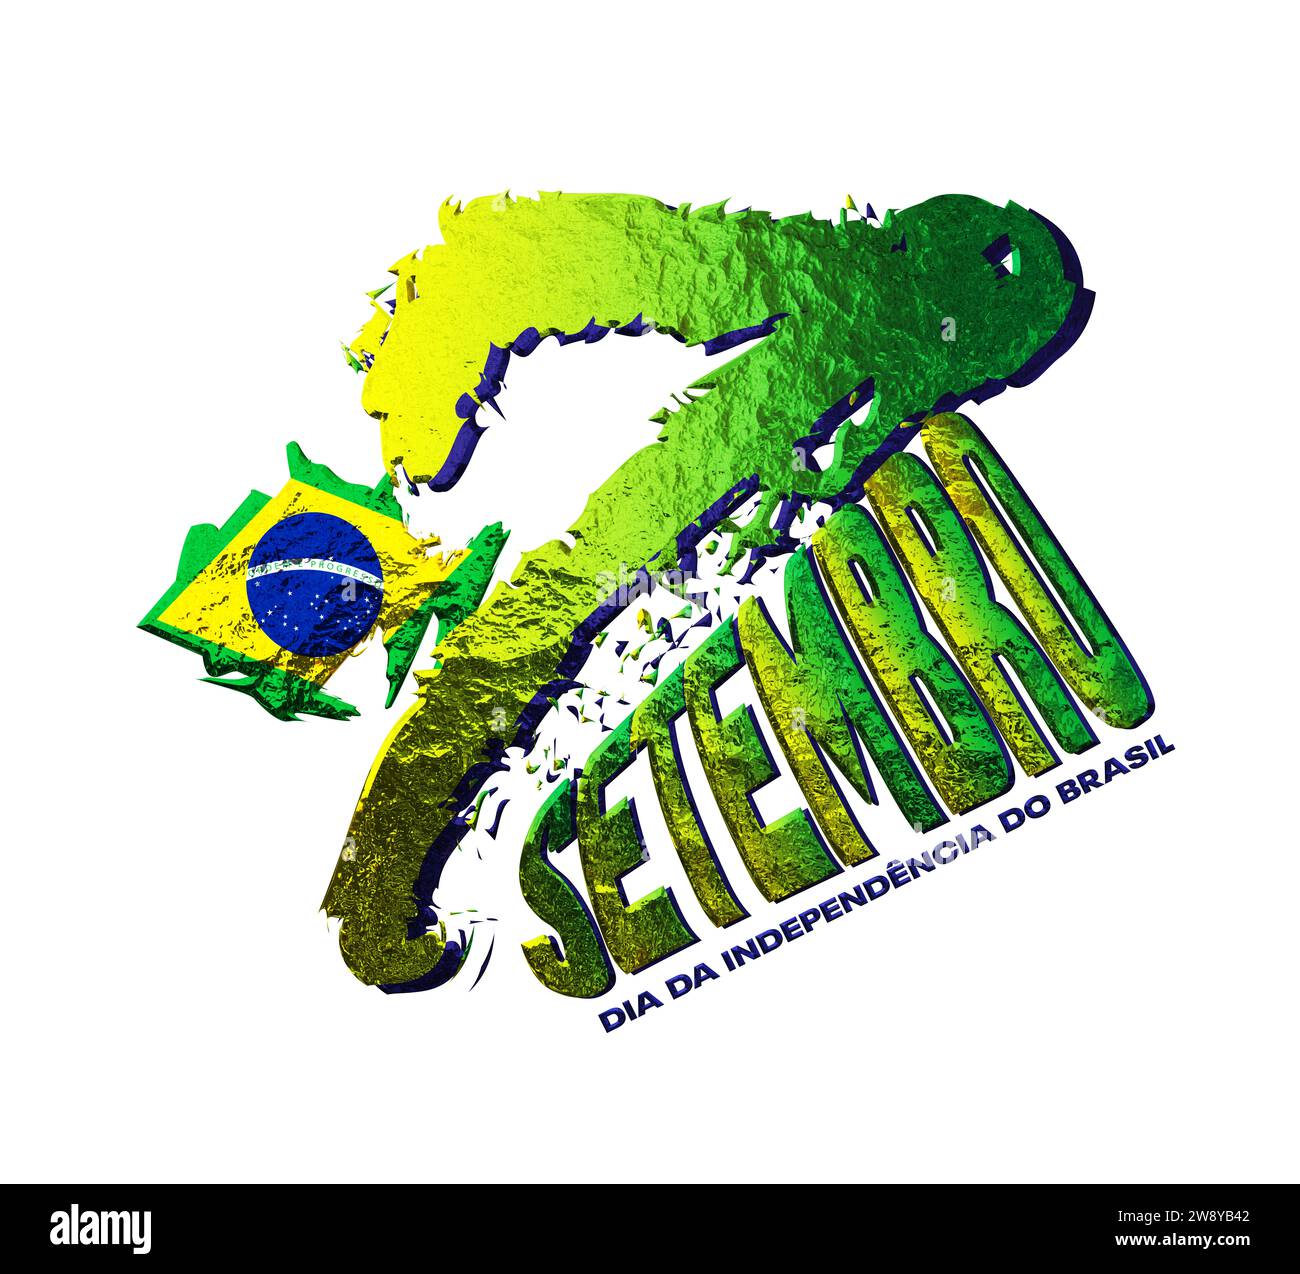 brazil independence day illustration Stock Photo